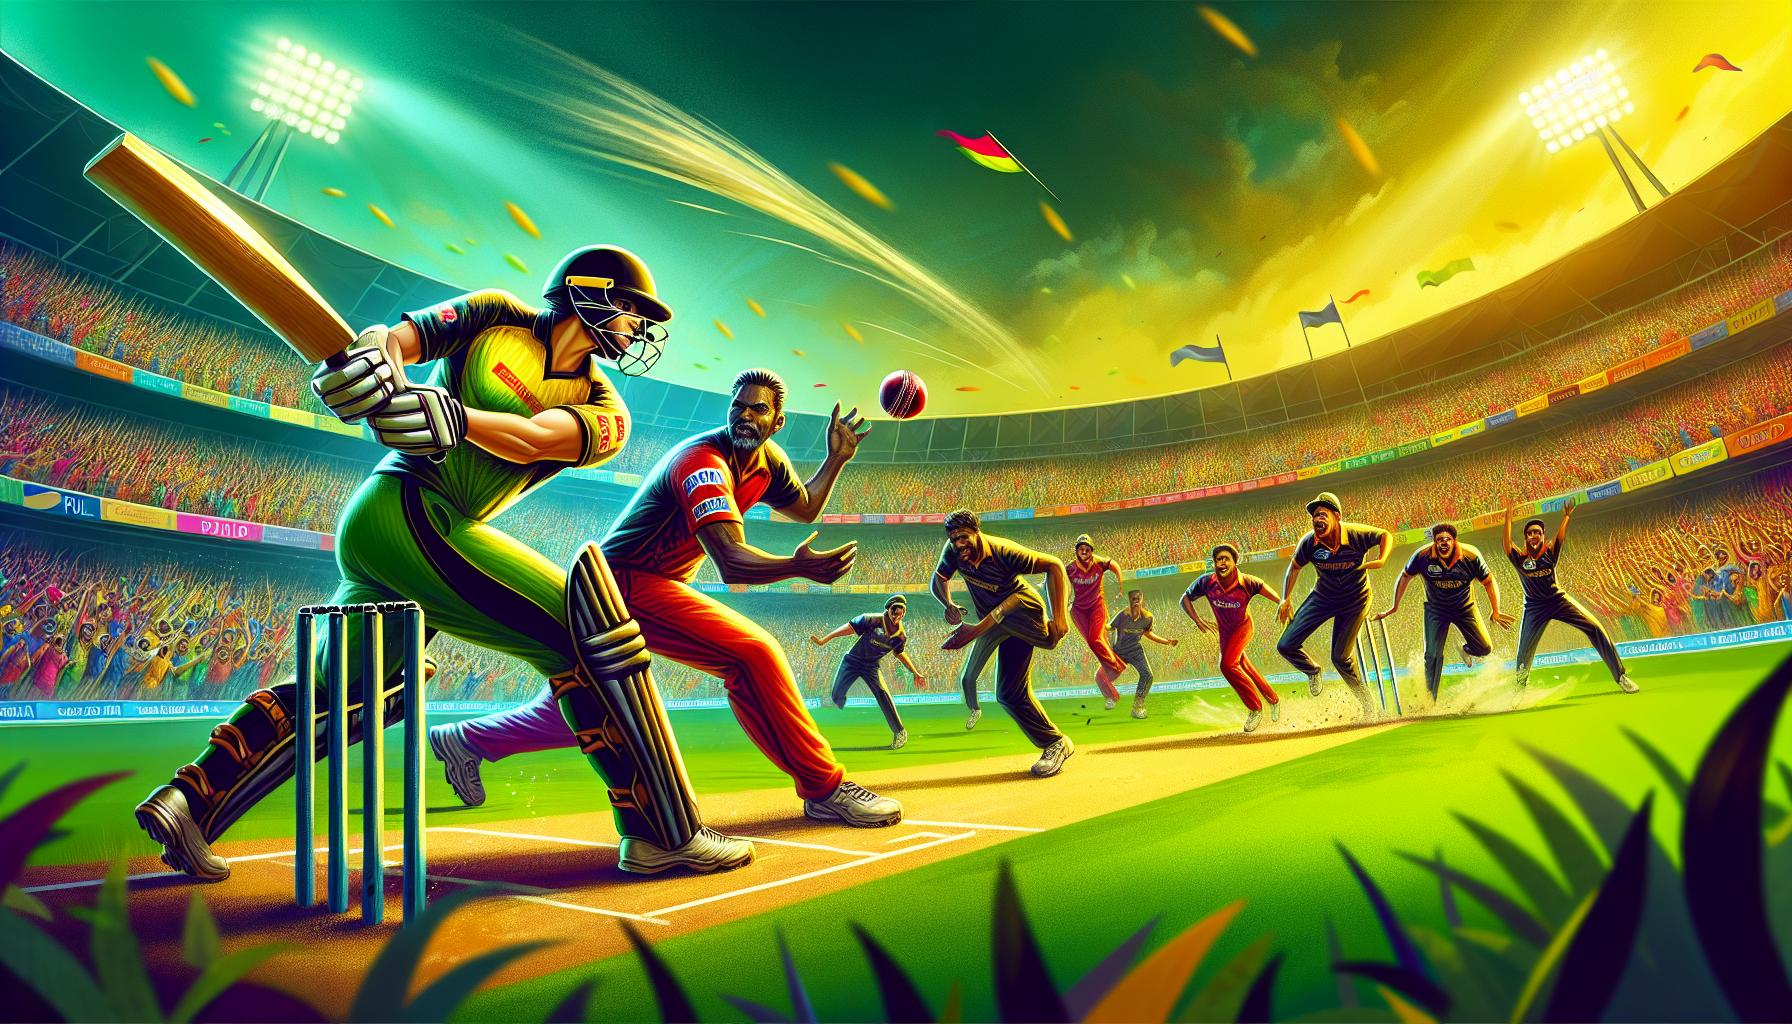 Illustration of IPL cricket match